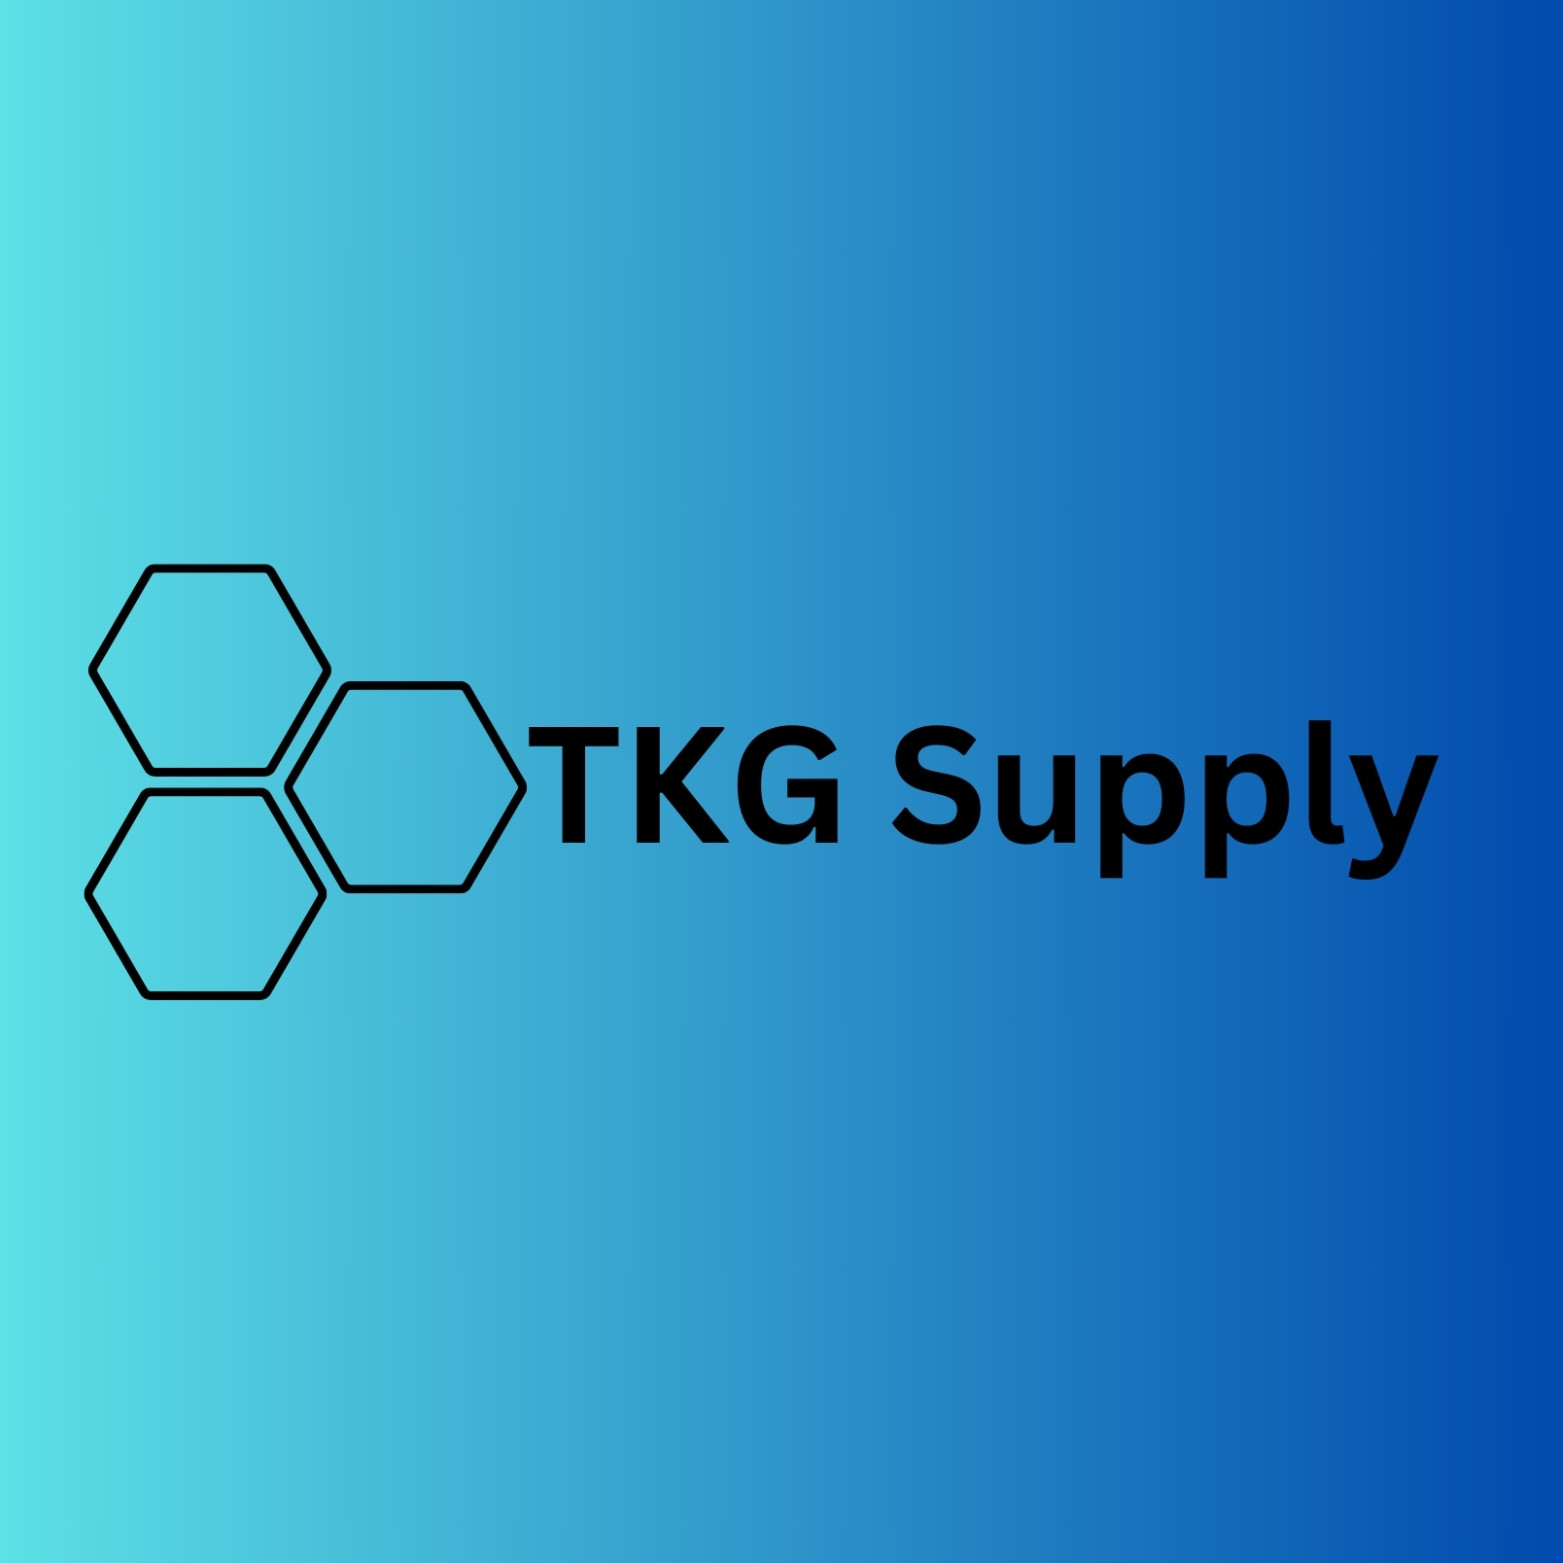 TKG Supply